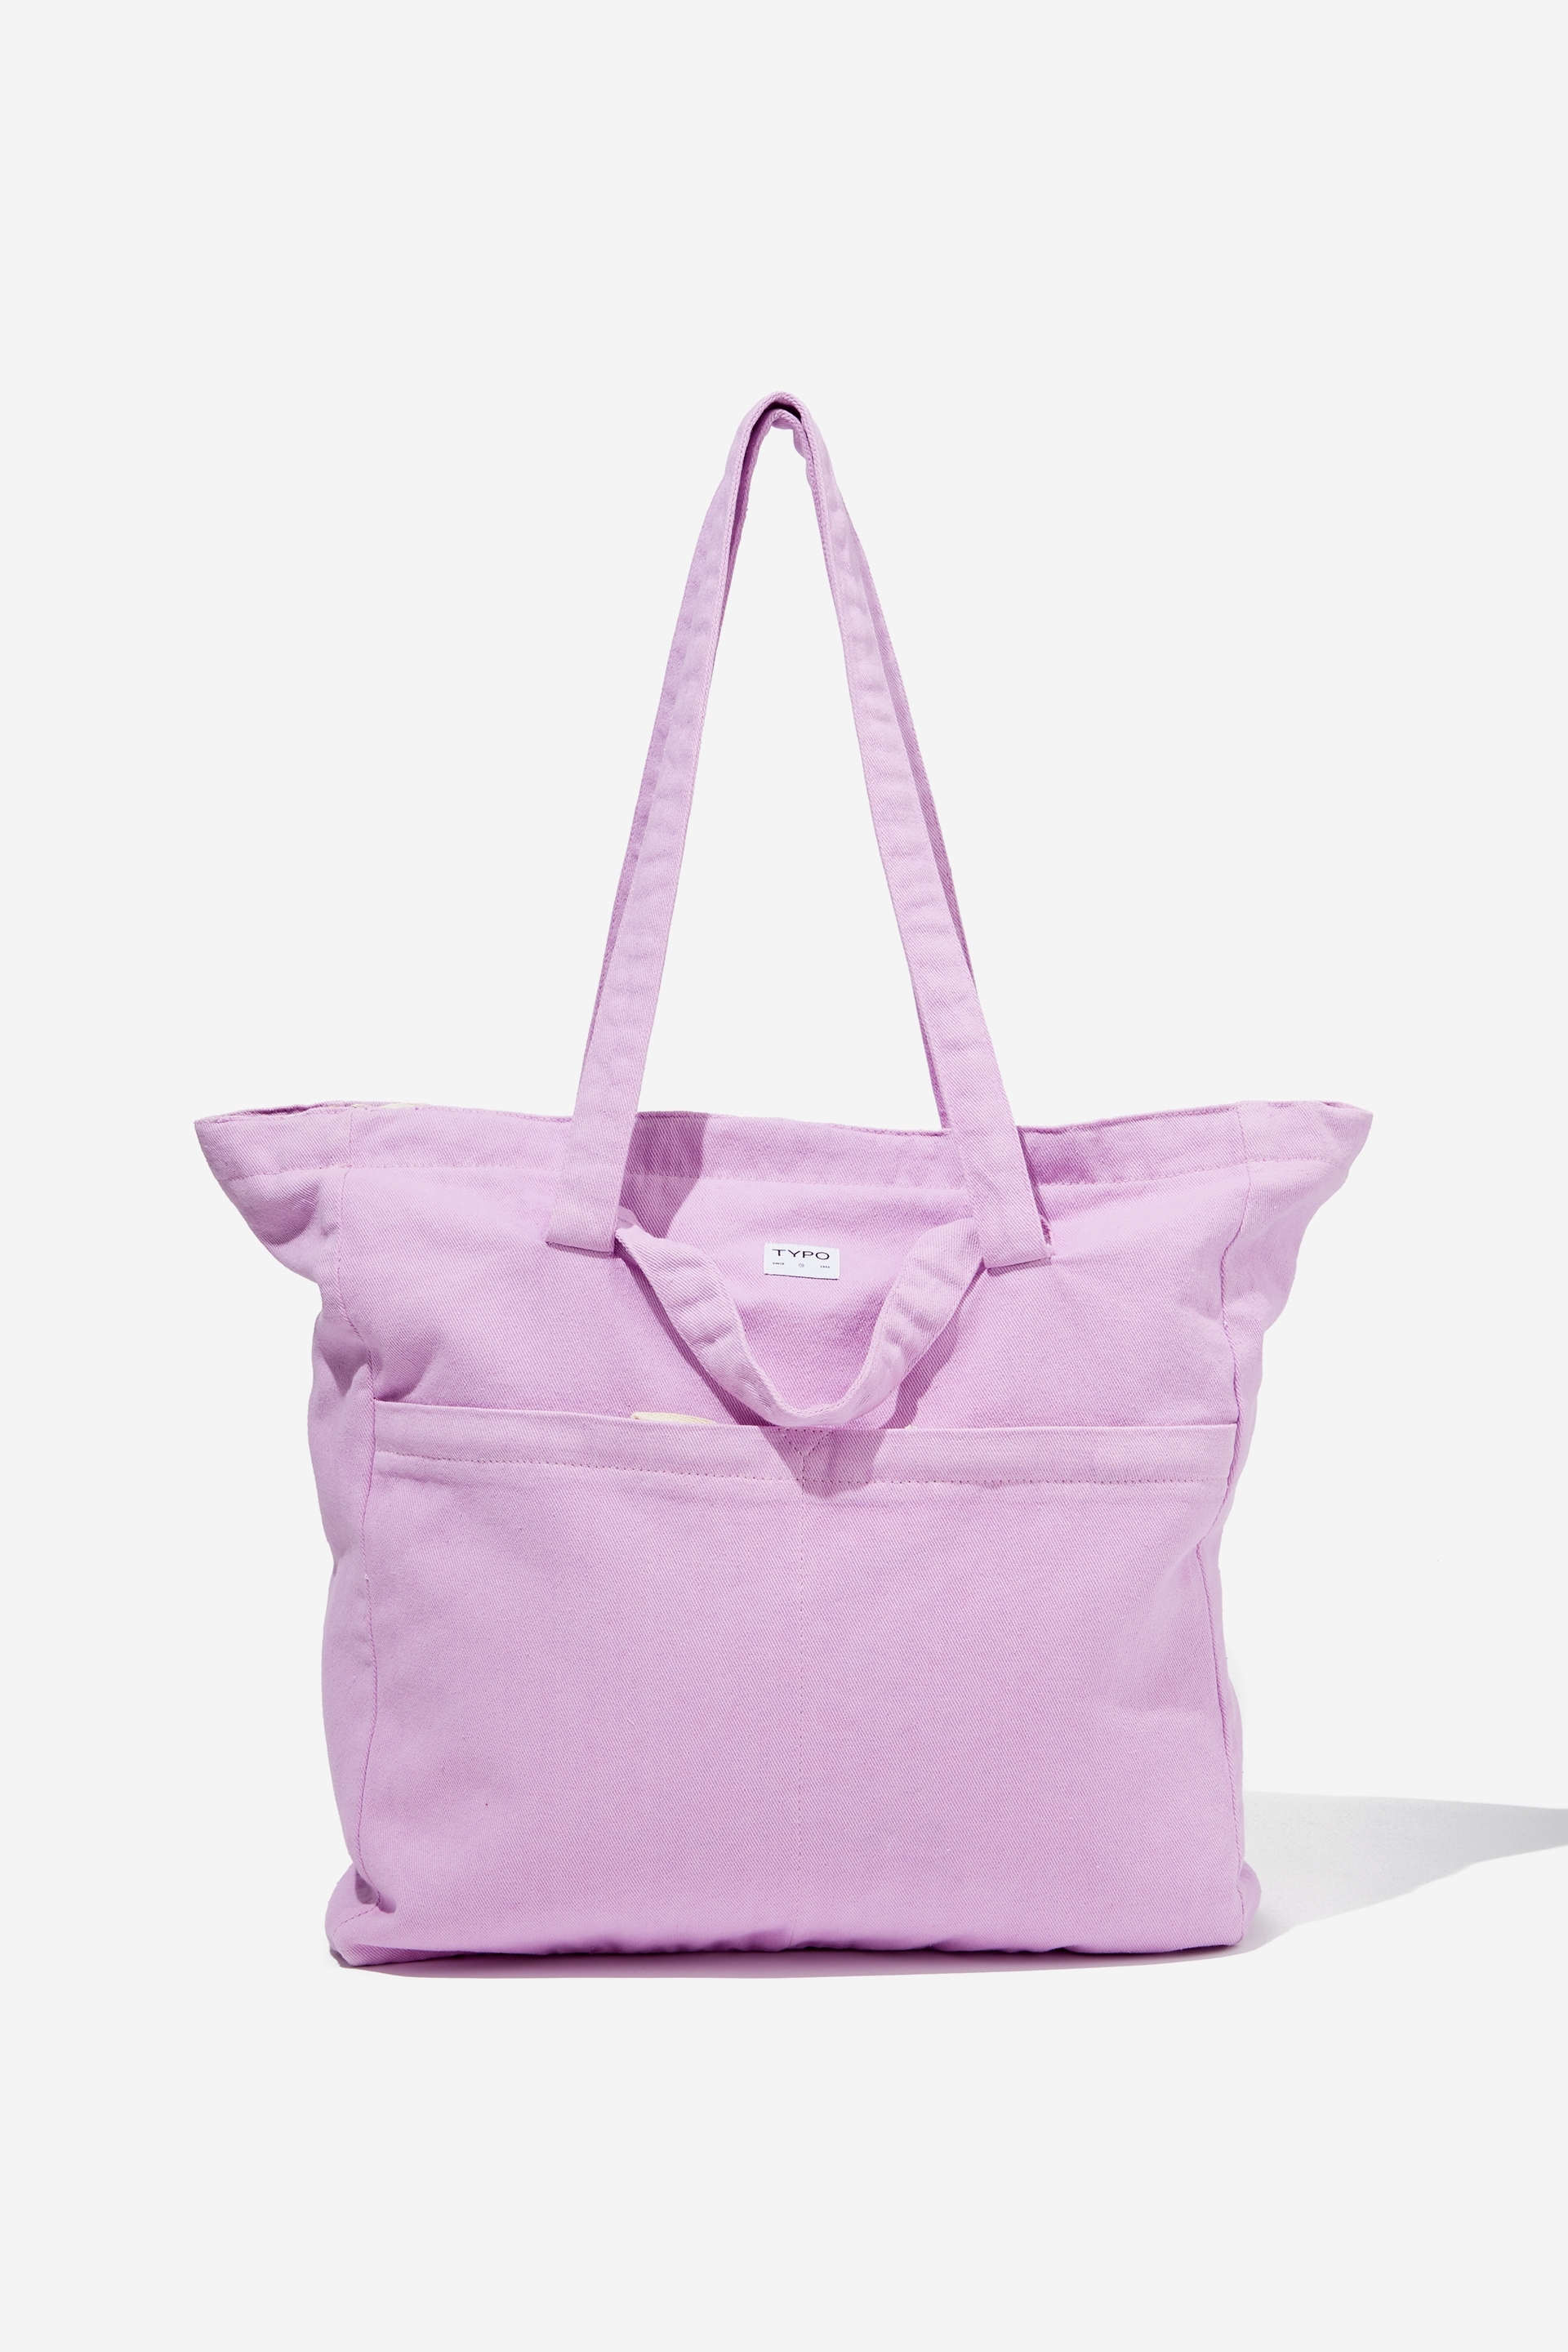 Typo - Wellness Tote Bag - Pale lavender